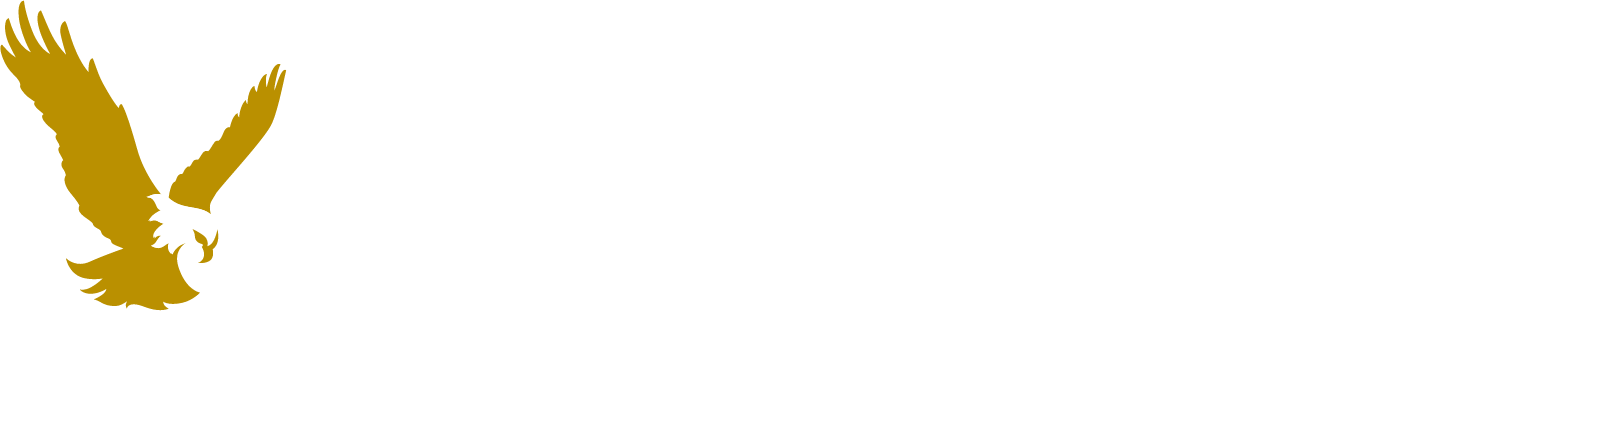 First Republic Bank
 logo large for dark backgrounds (transparent PNG)